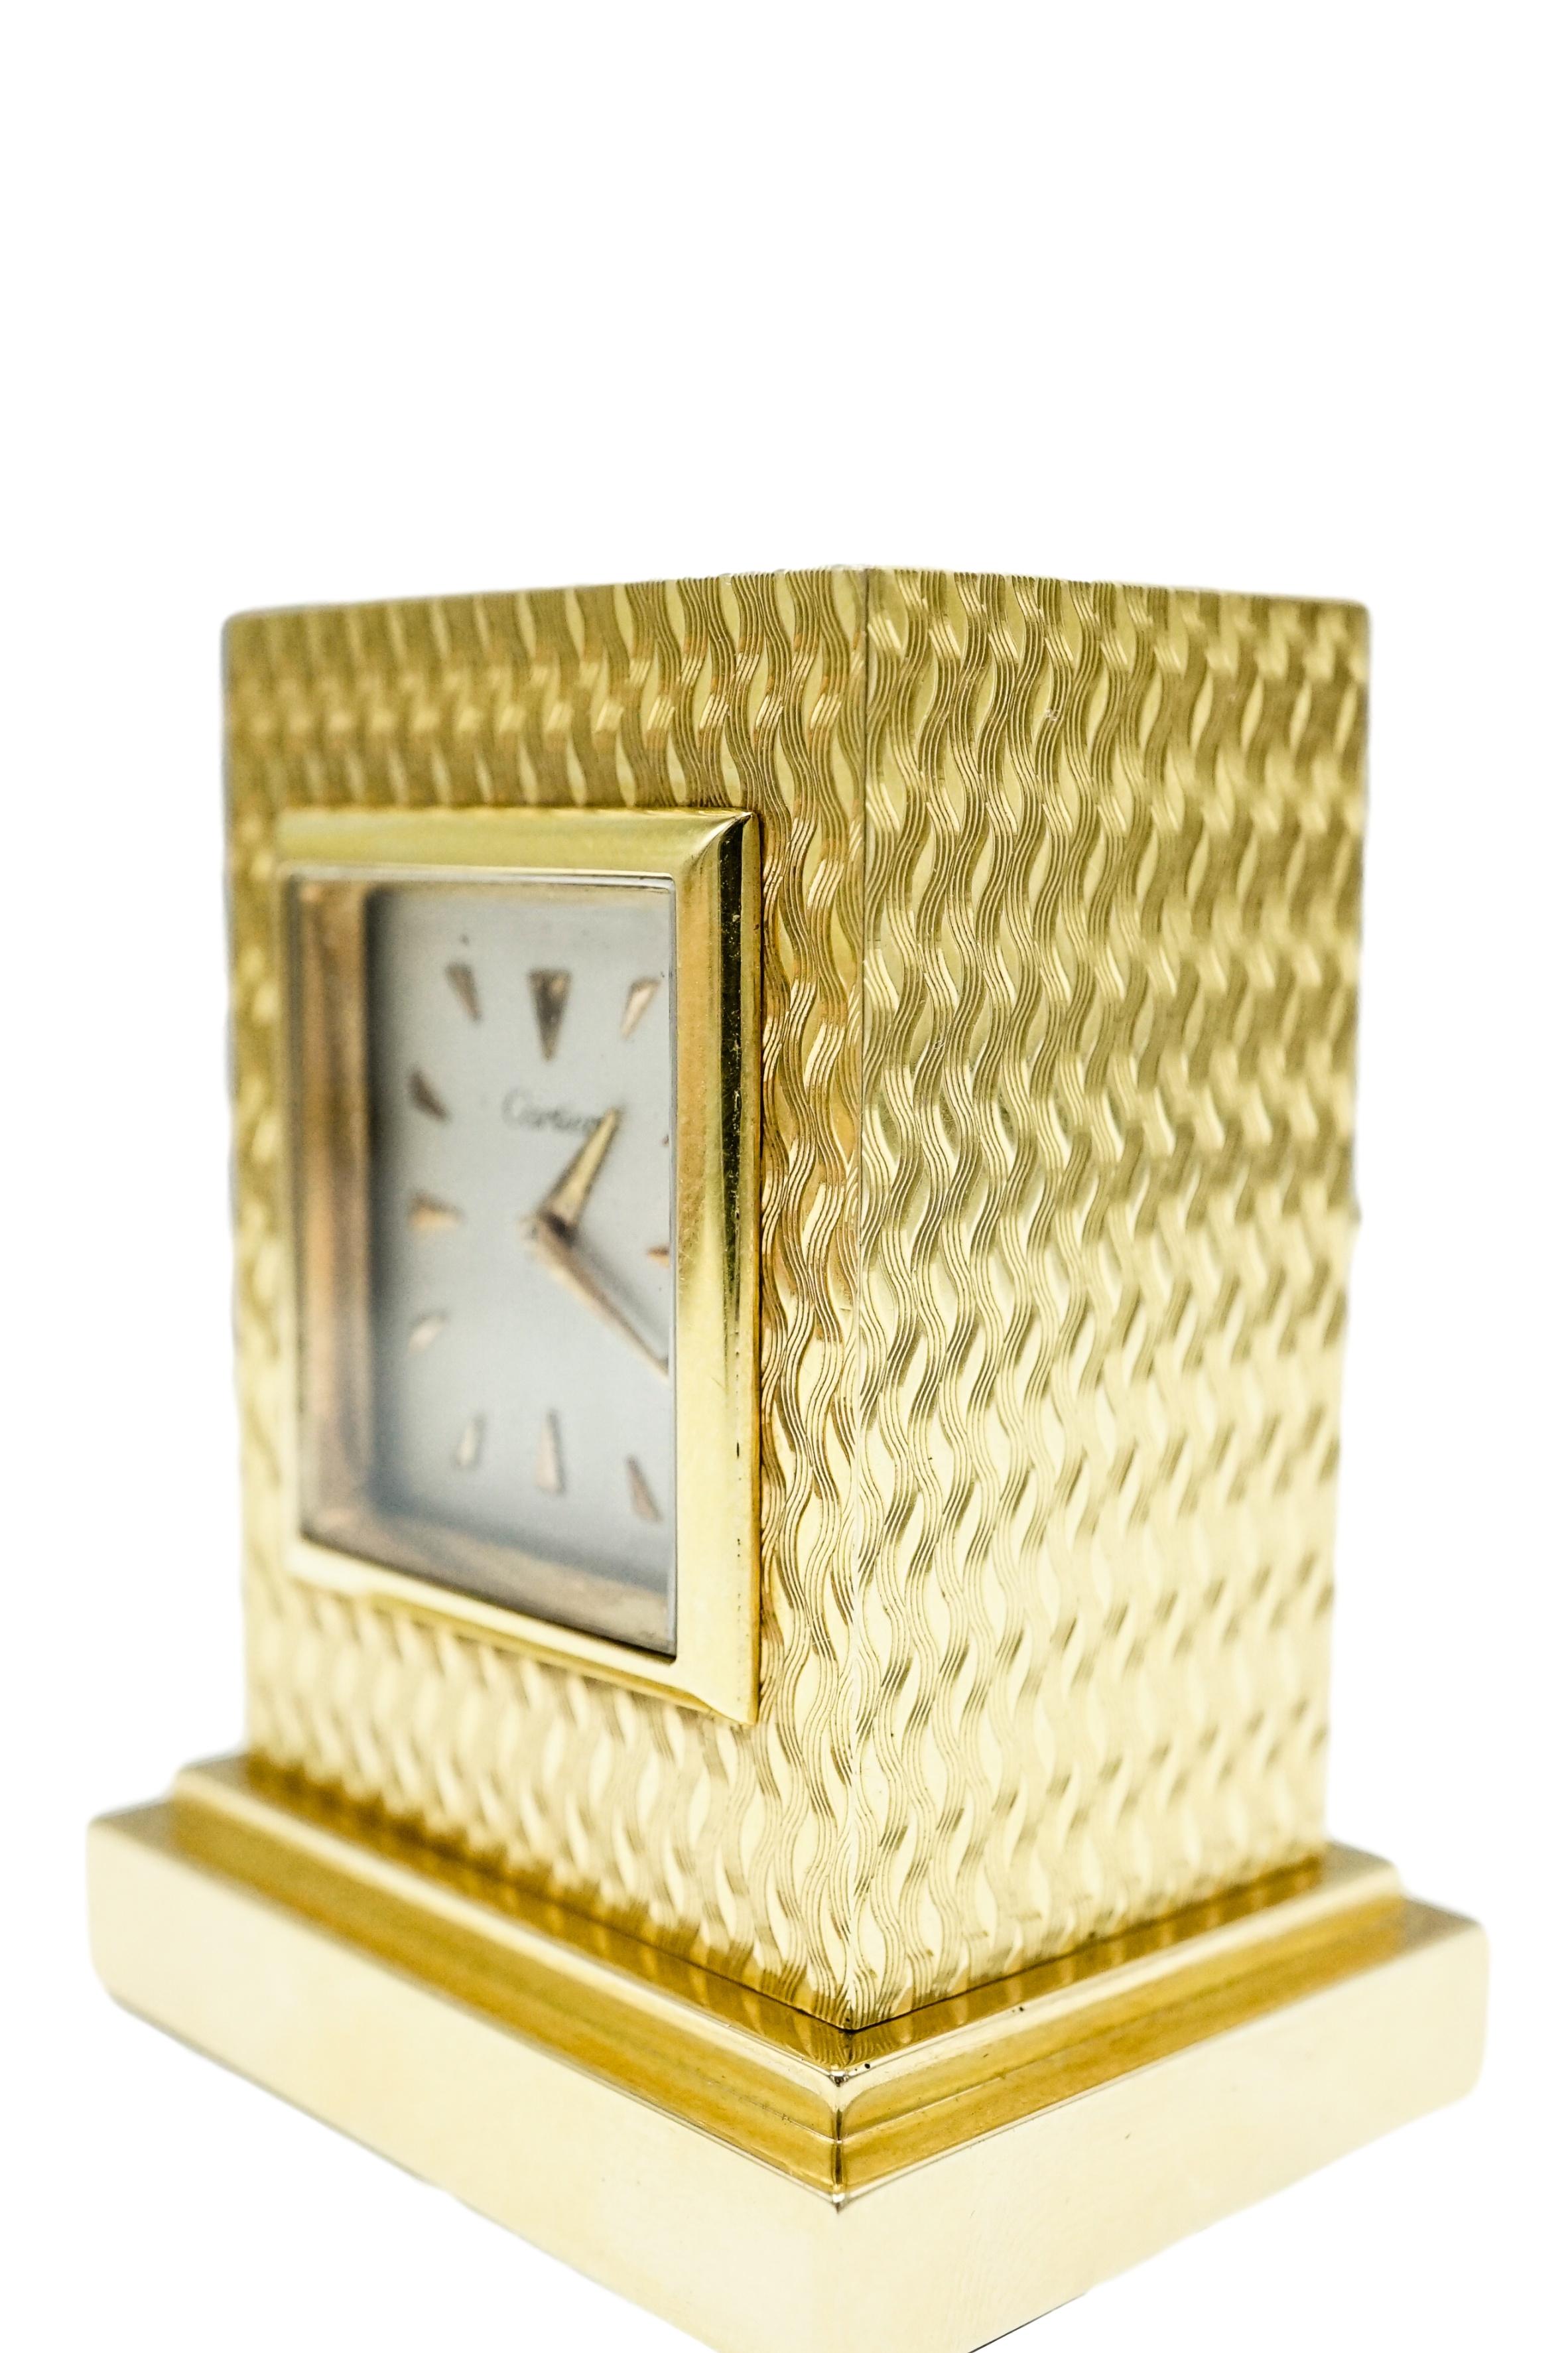 Cartier, Rectangular outline, gold, mechanical movement, 1 5/8 x 1 ¼ x 2 1/8 ins., signed Cartier, movement by Geneva Clock Company